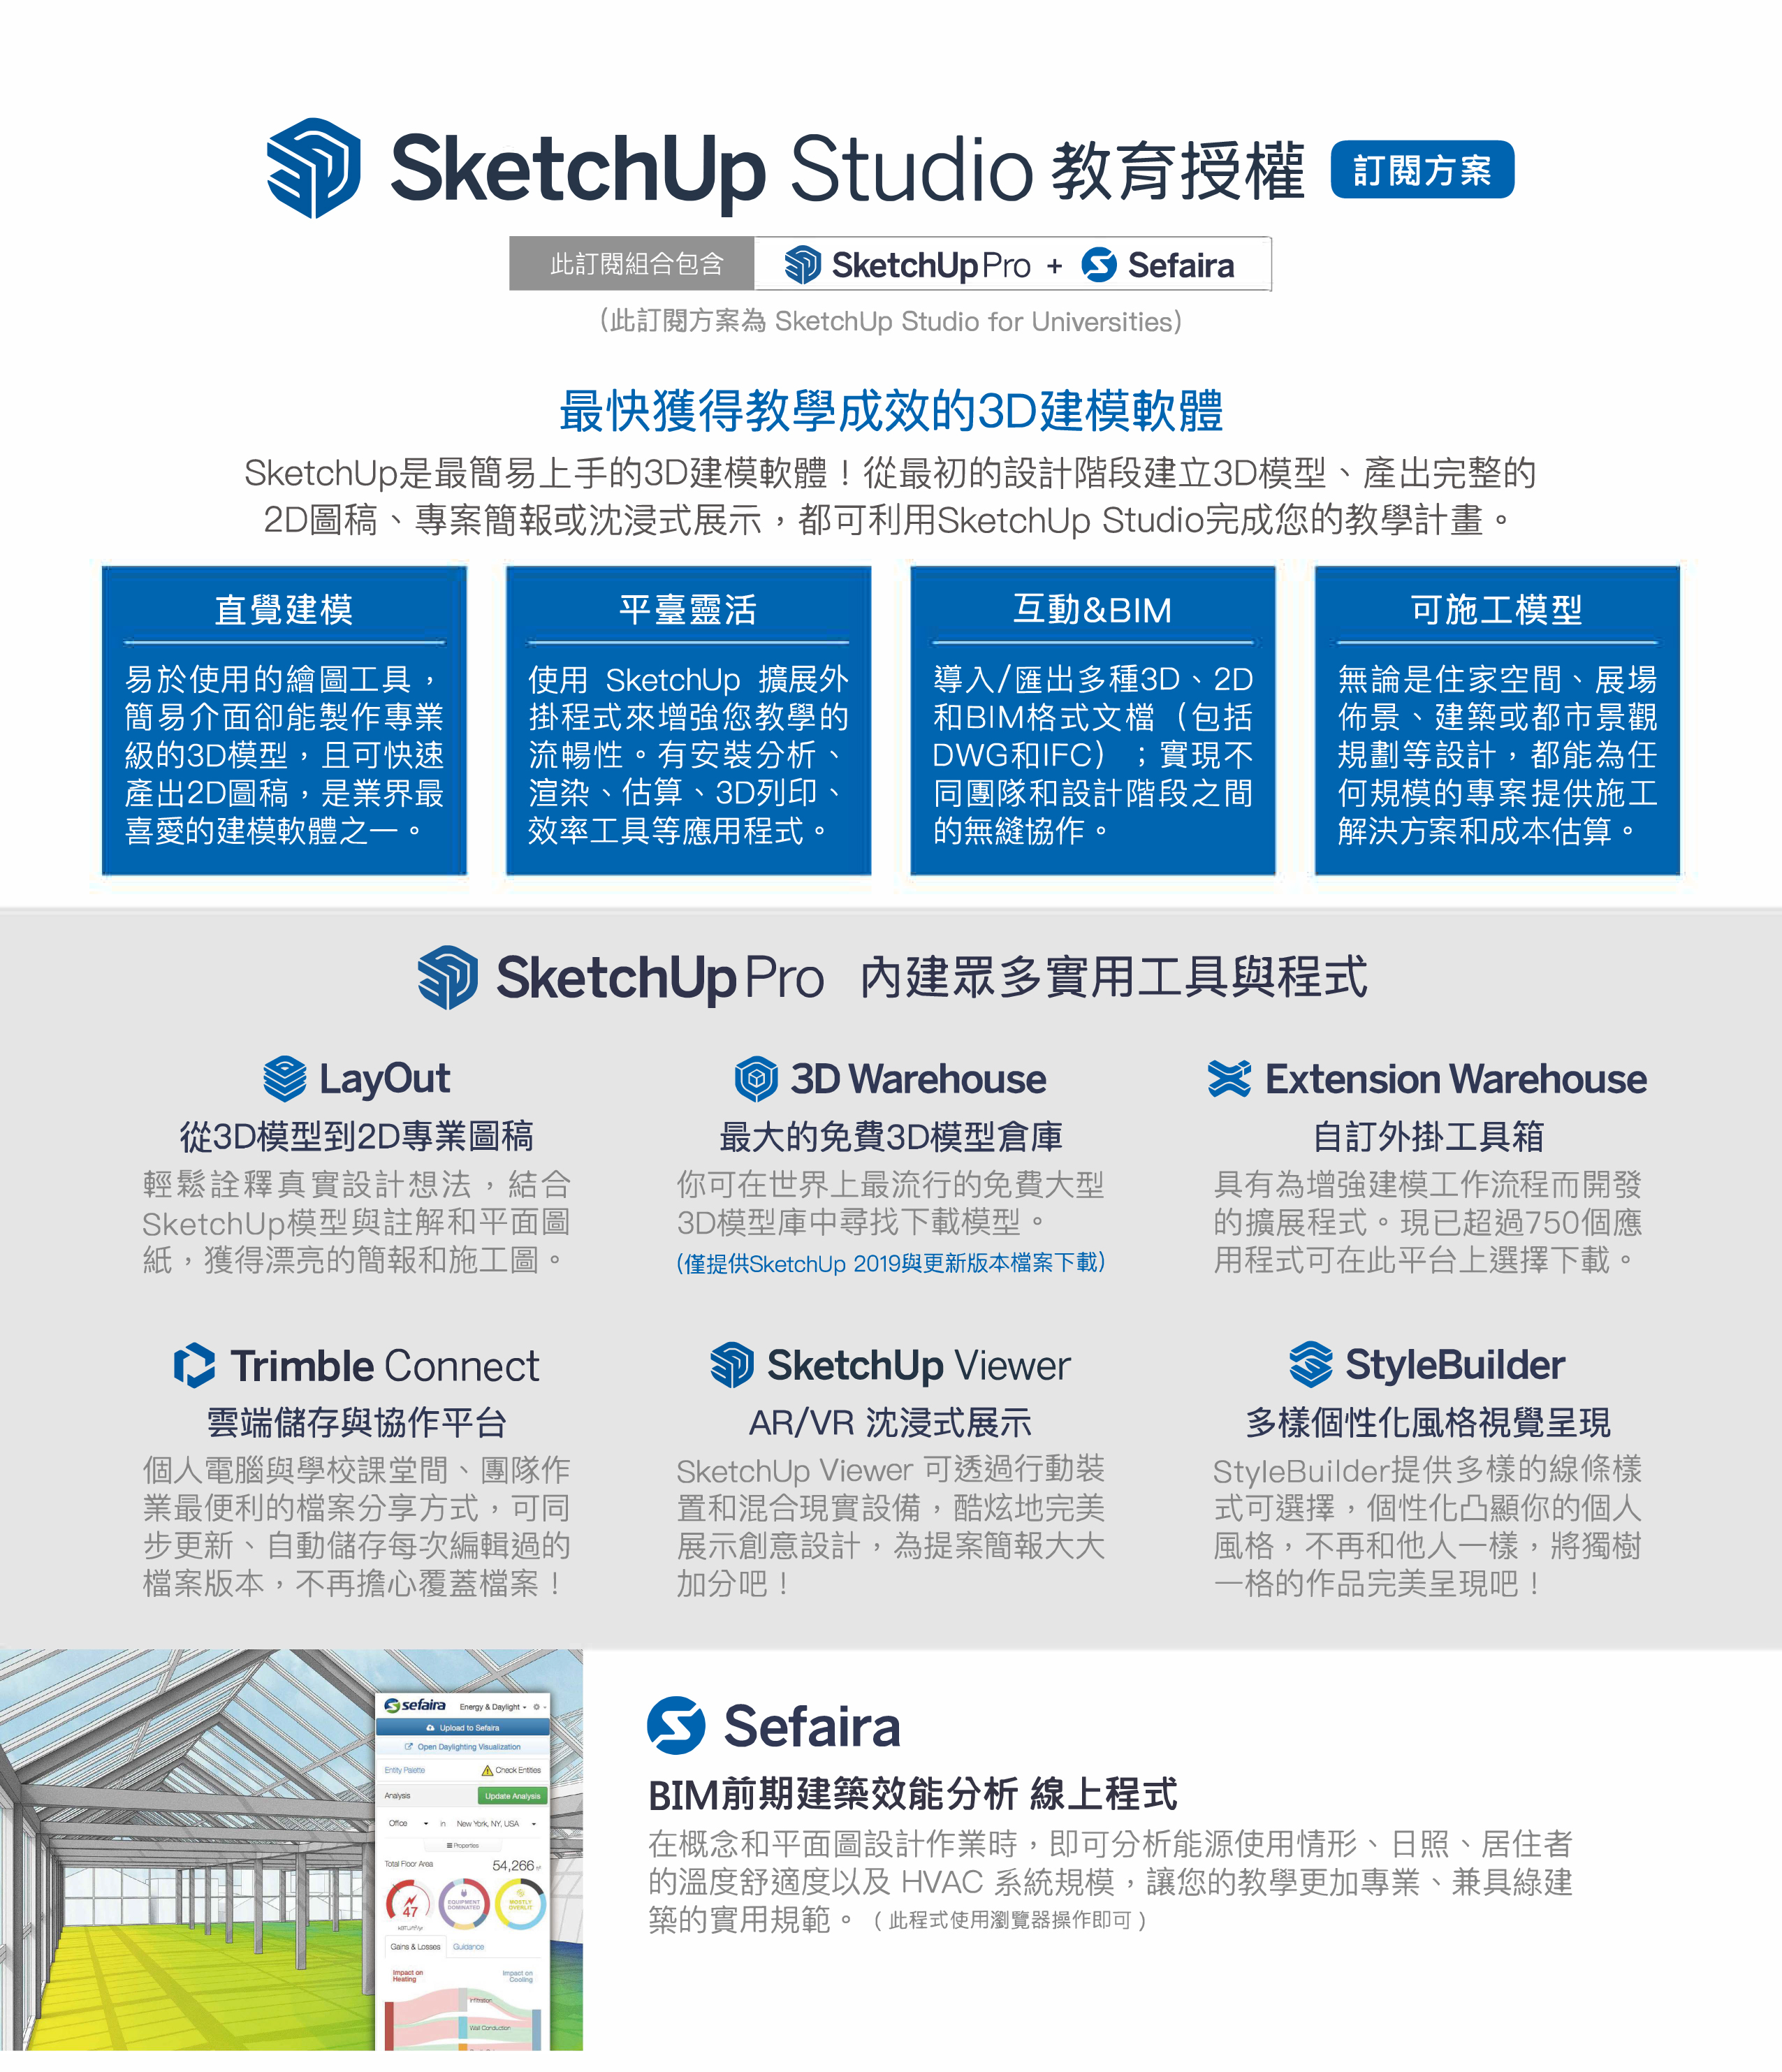 7_E SketchUp 3D 設計軟體 - SketchUp Studio教育授權